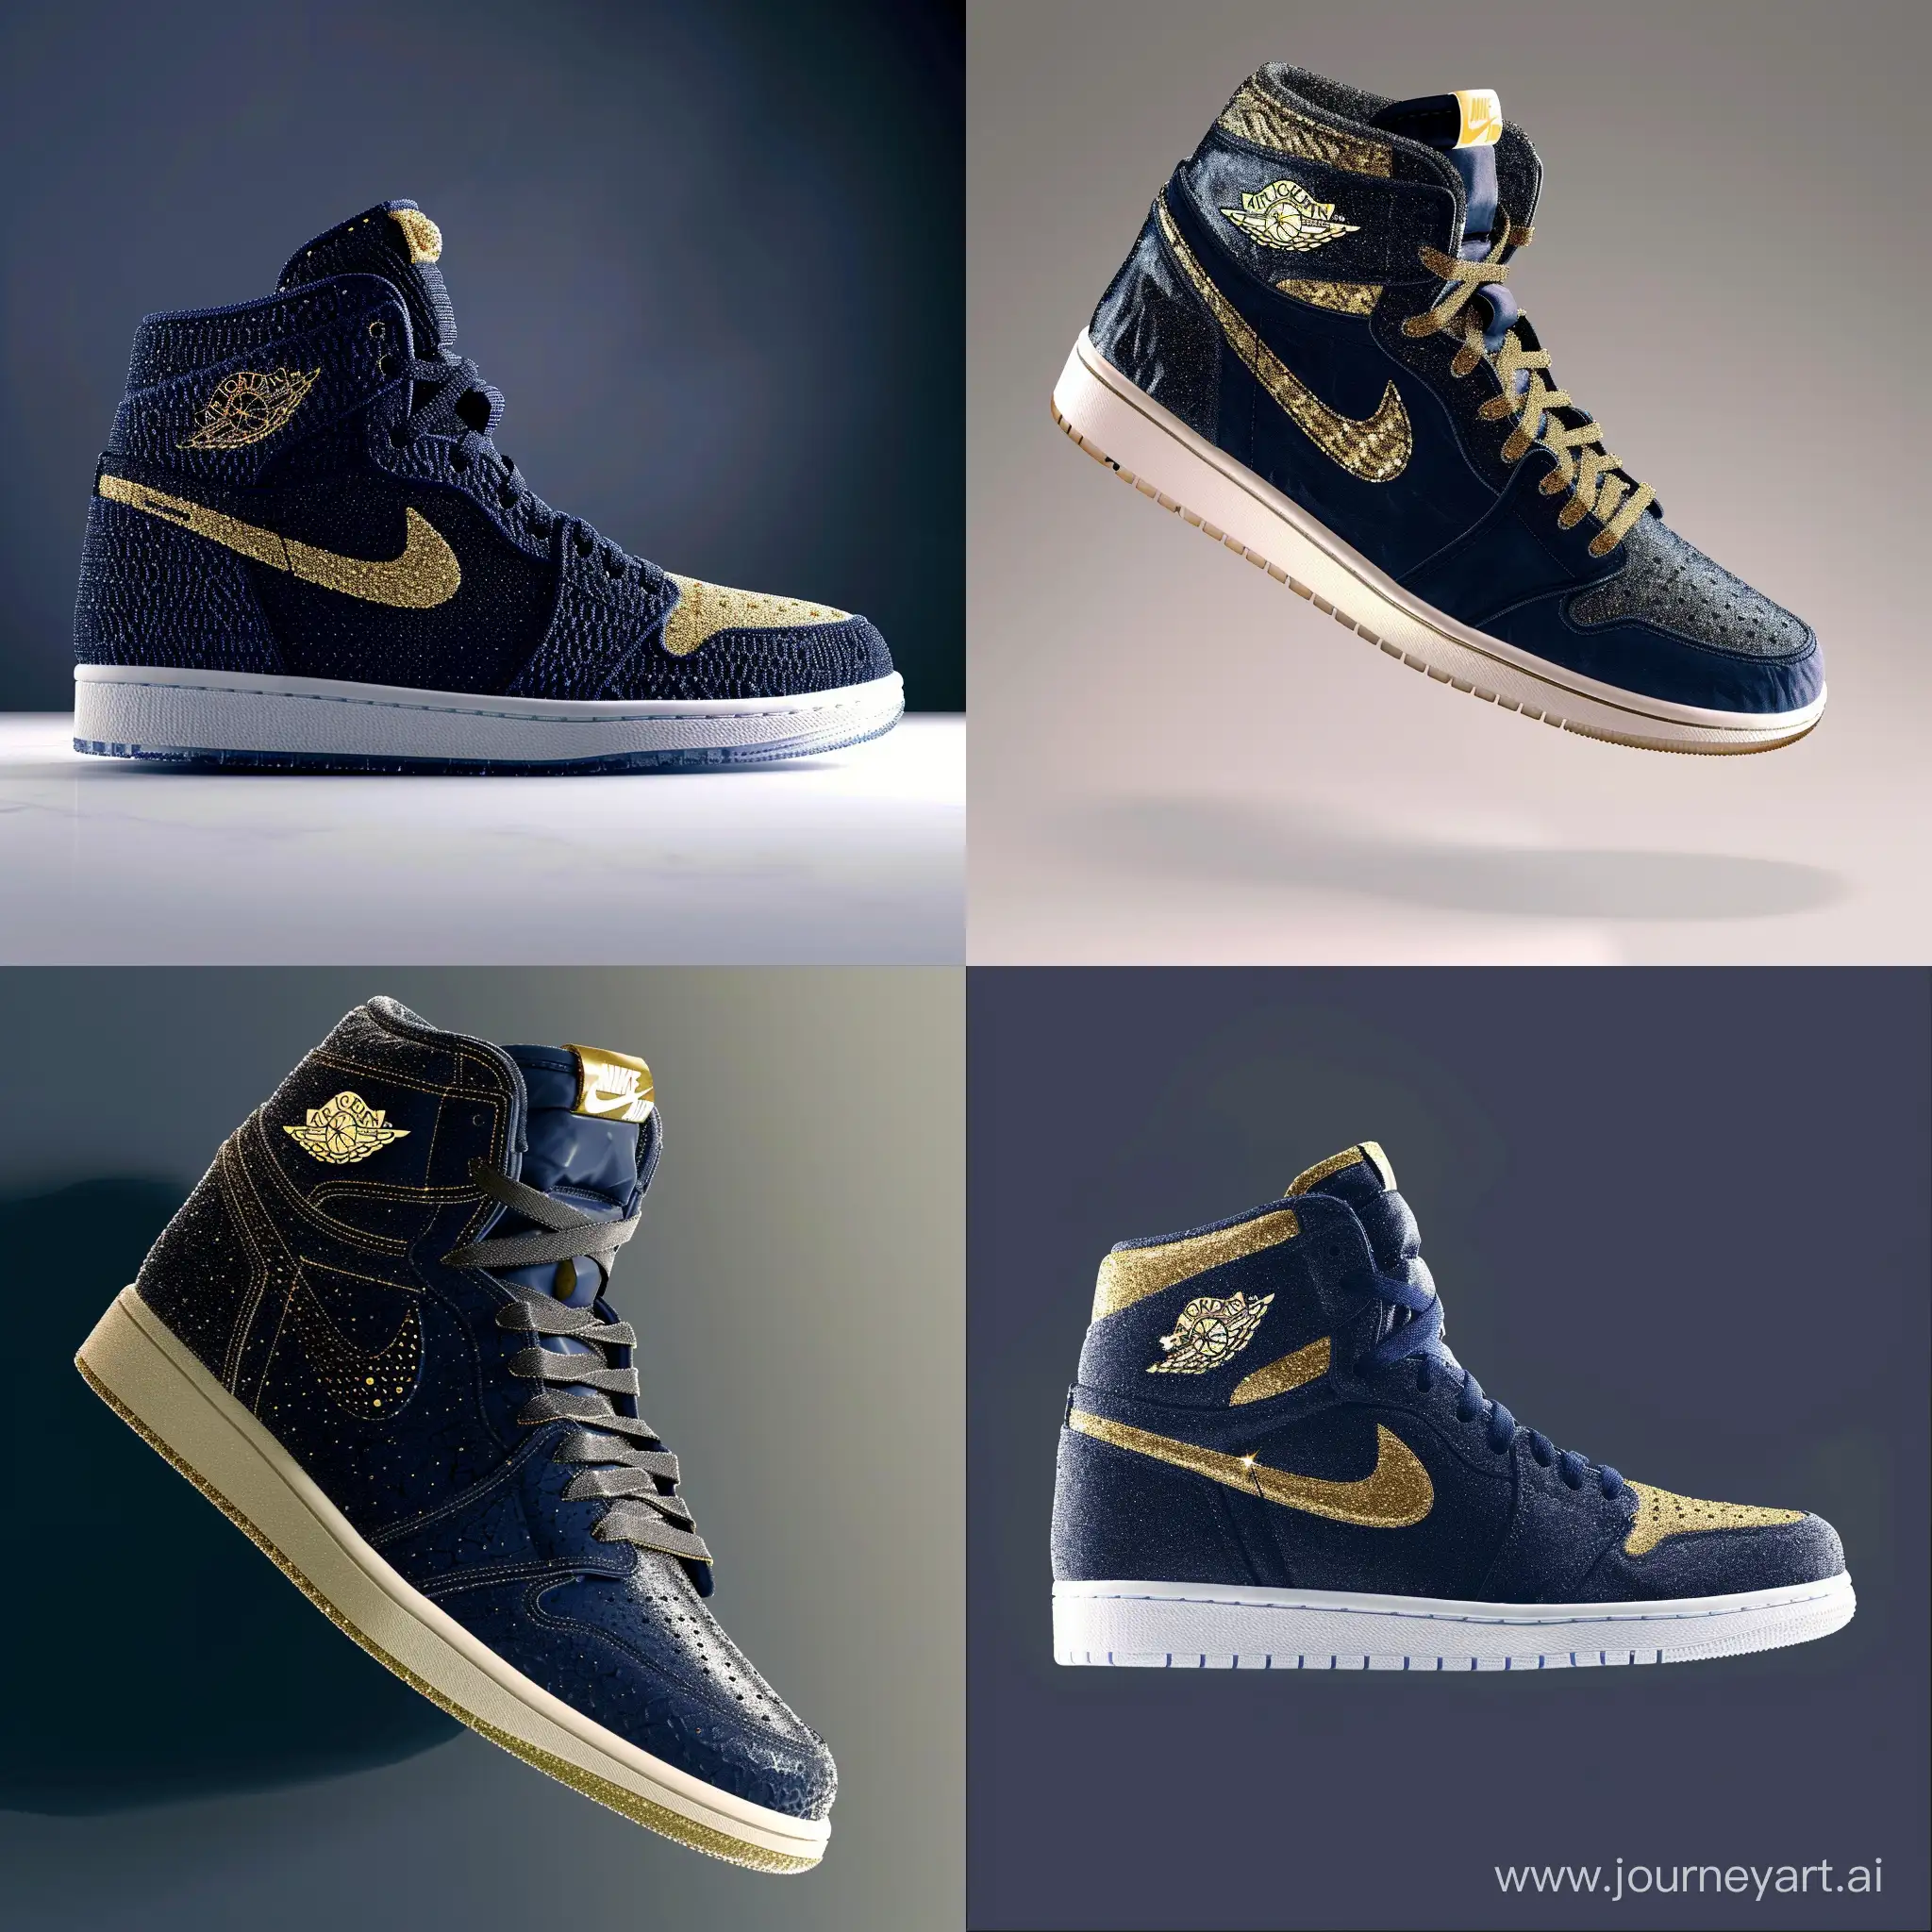 Blue-Navy-Nike-Air-Jordan-1-Sneaker-with-Gold-Persian-Art-Design-on-Simple-Background